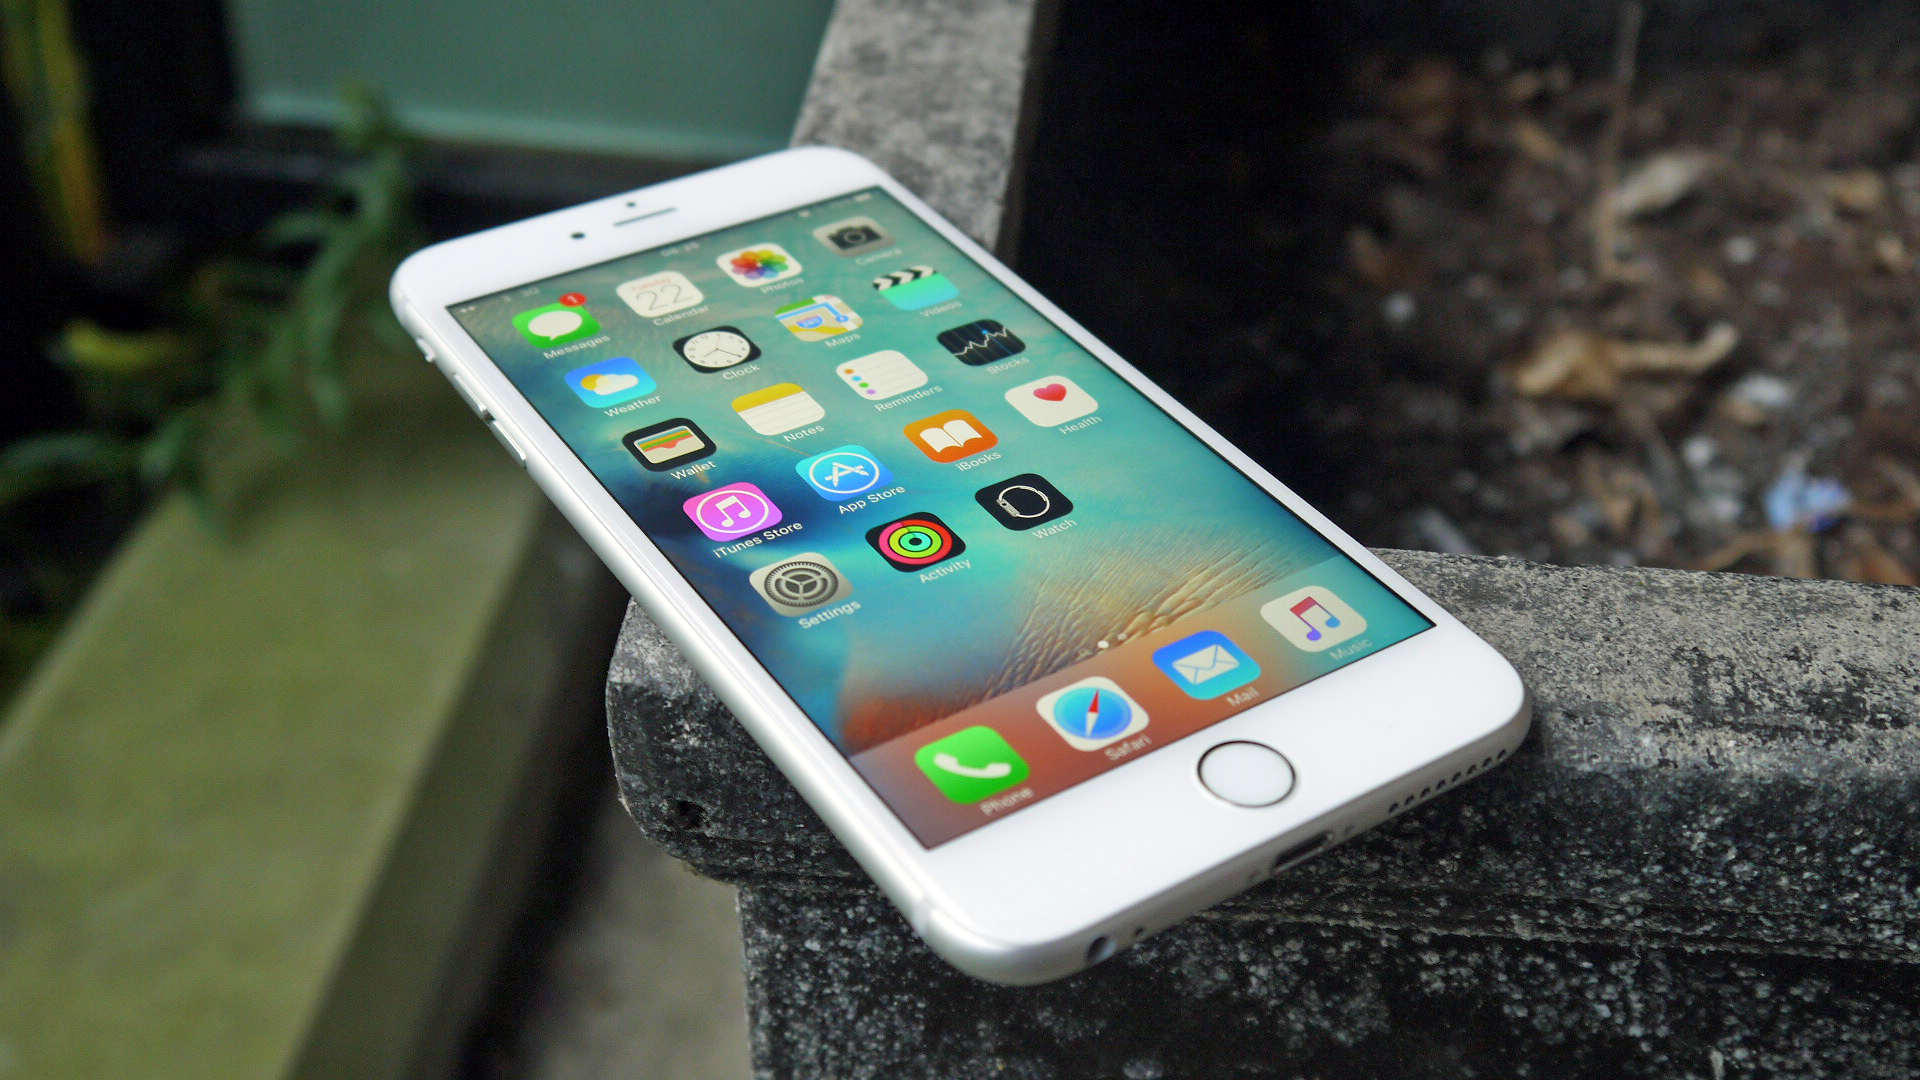 Best Buy: Apple iPhone 6s Plus 16GB Space Gray (Verizon) MKV32LL/A